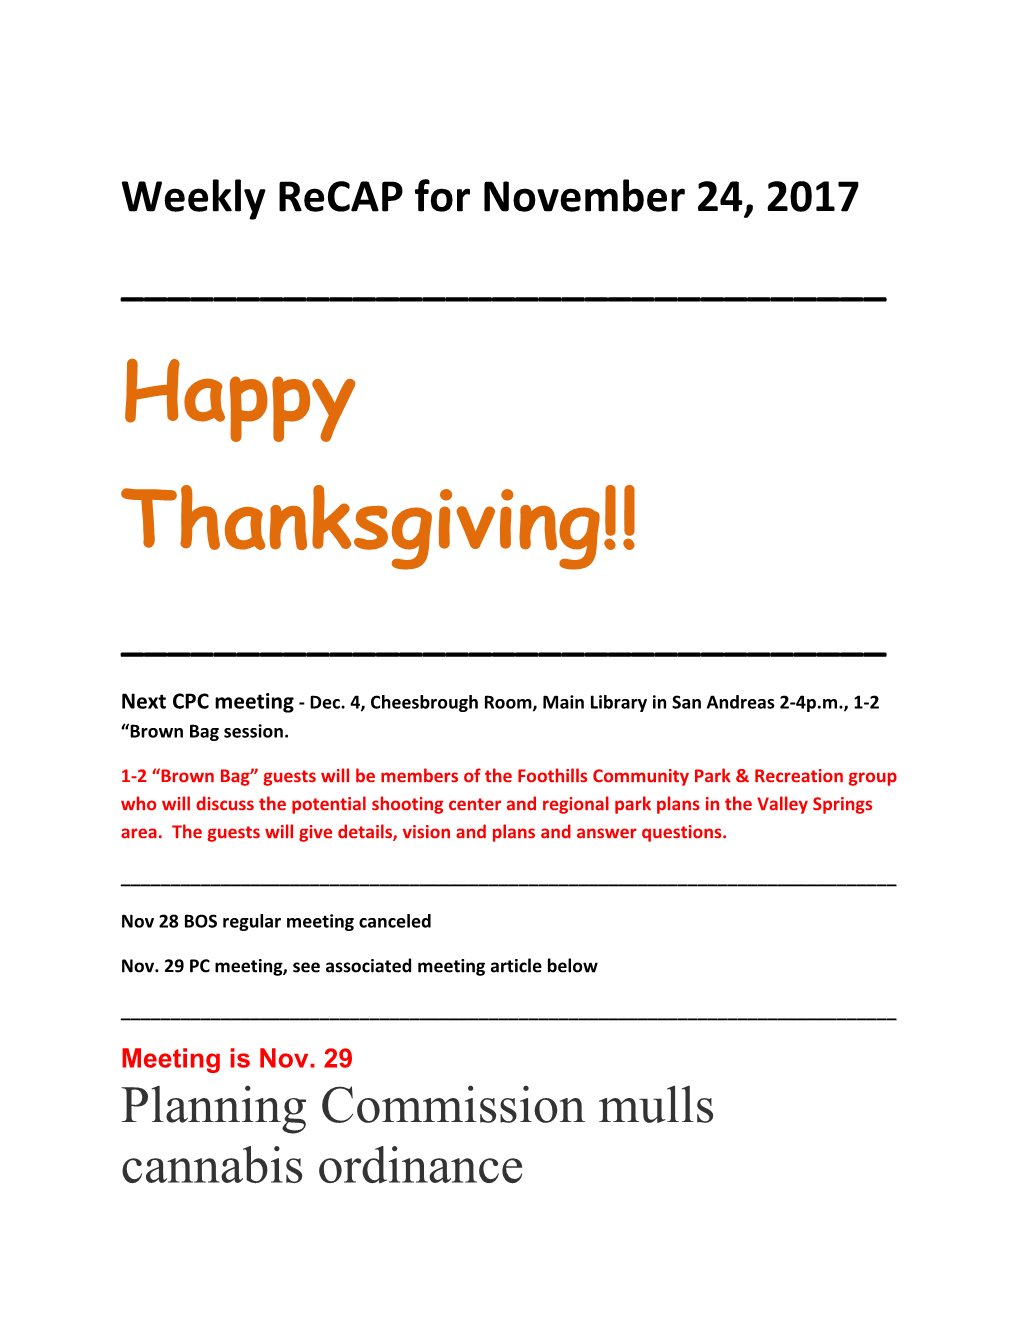 Weekly Recap for November 24, 2017